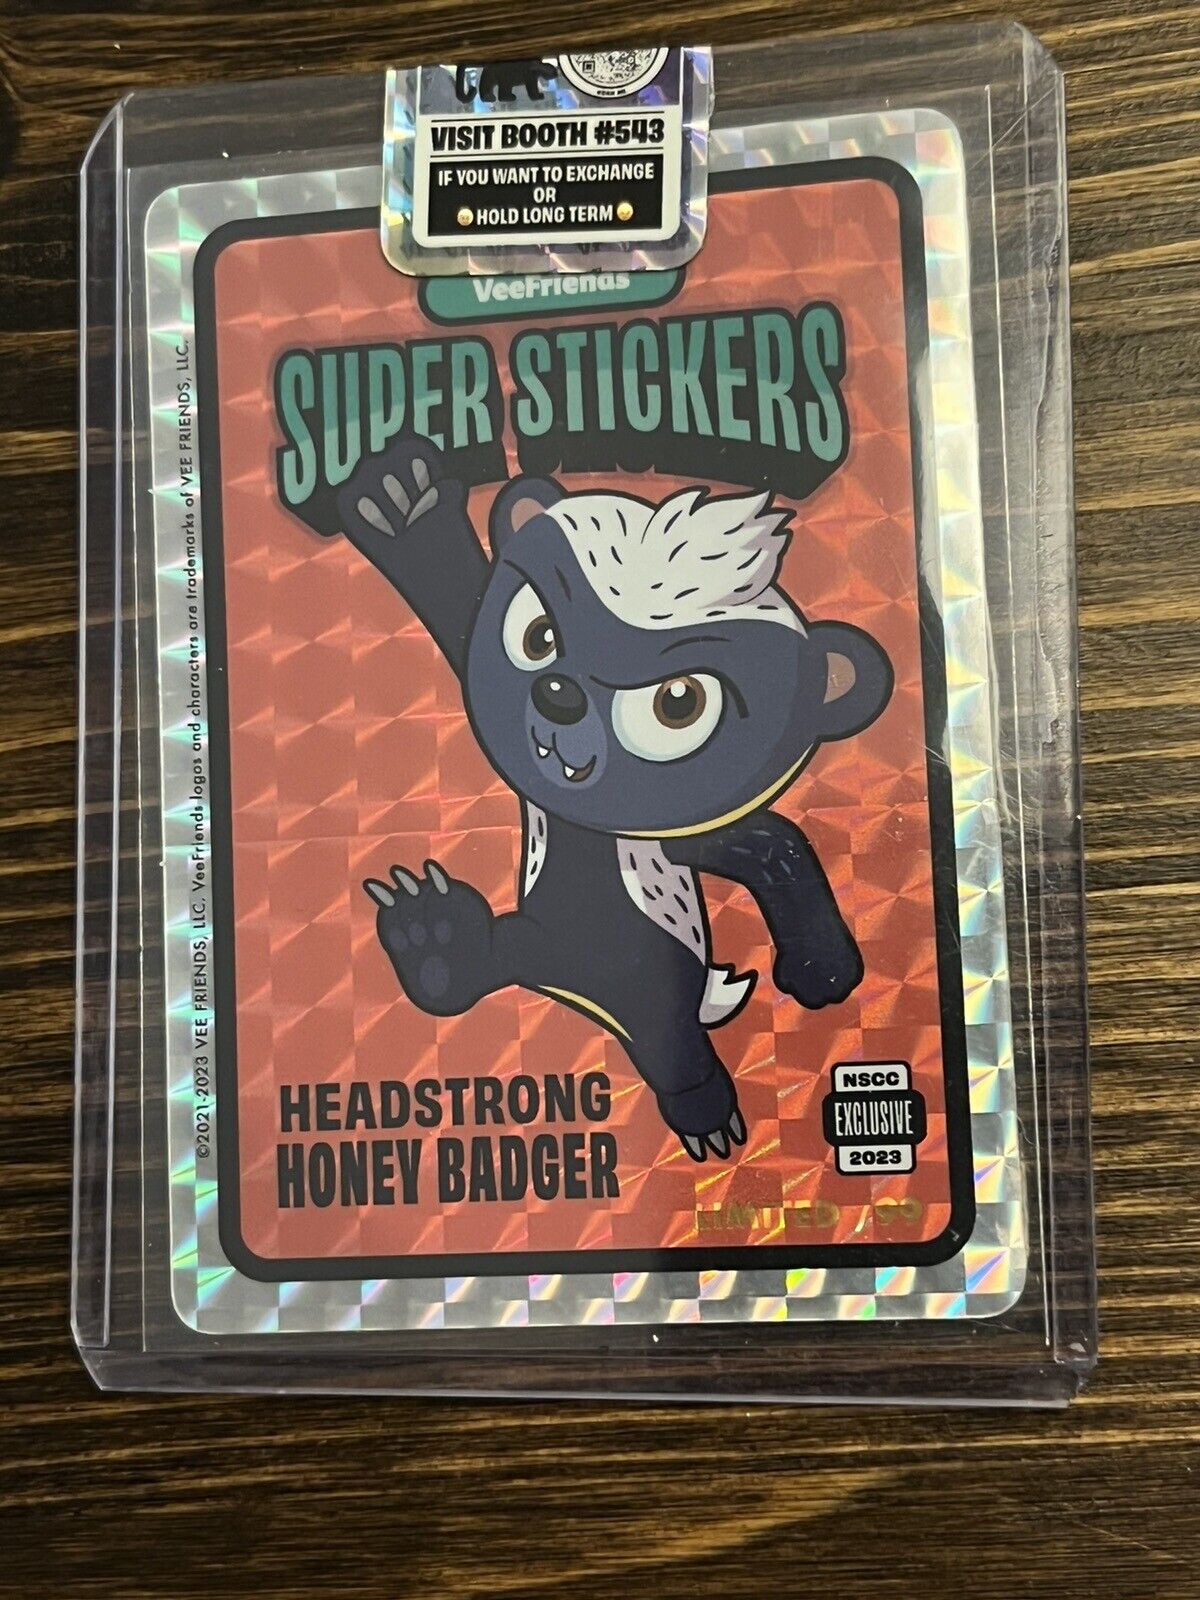 2023 National Exclusive Veefriends Super Sticker headstrong honey badger /99 